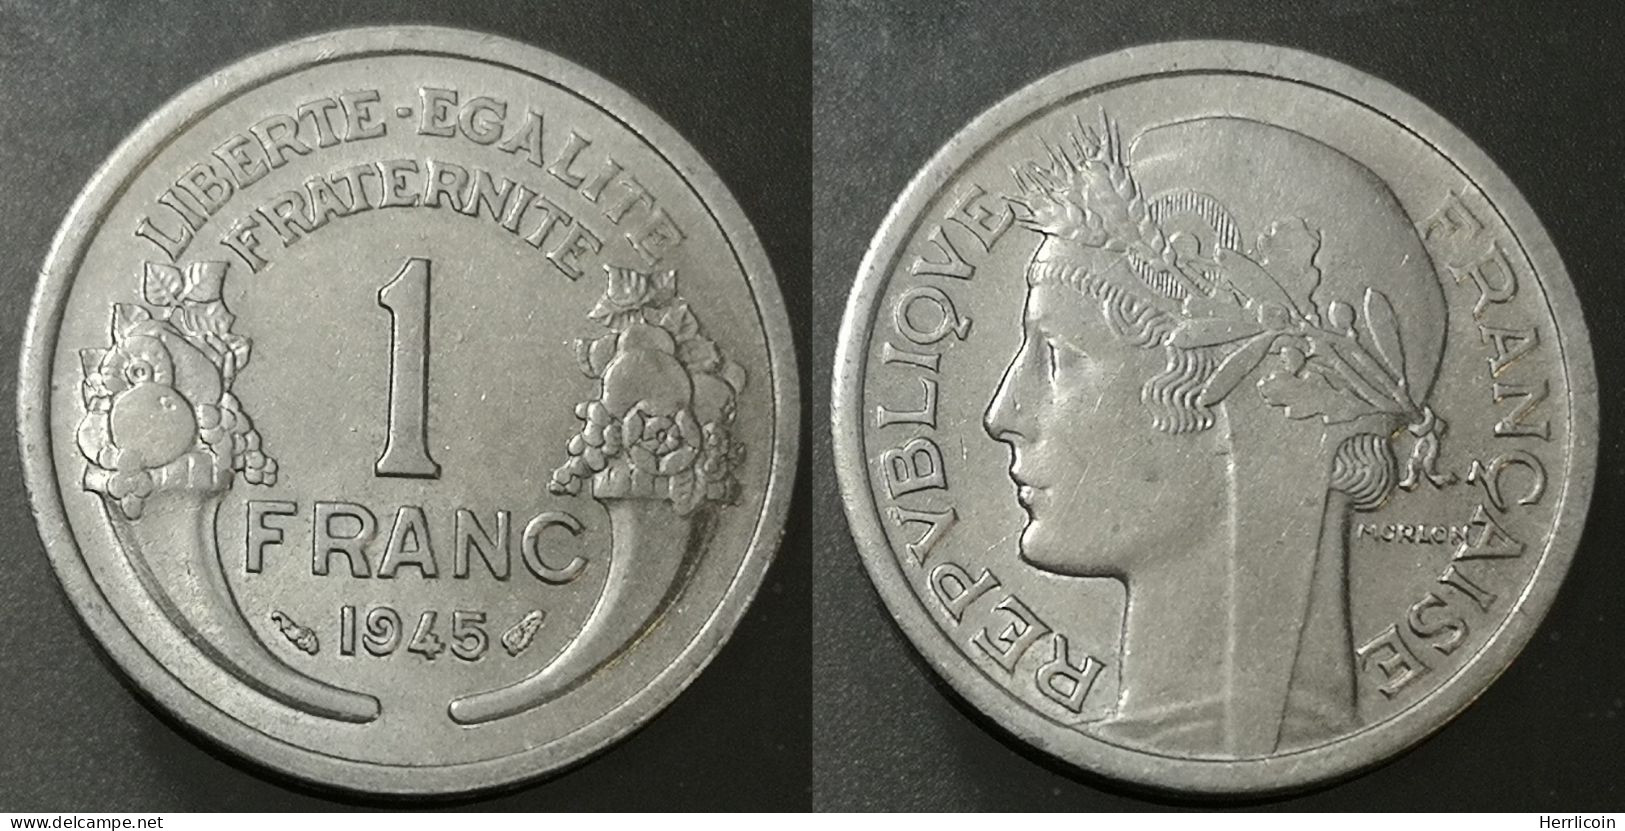 Monnaie France - 1945 - 1 Franc Morlon Aluminium, Légère (1,3g) - 1 Franc